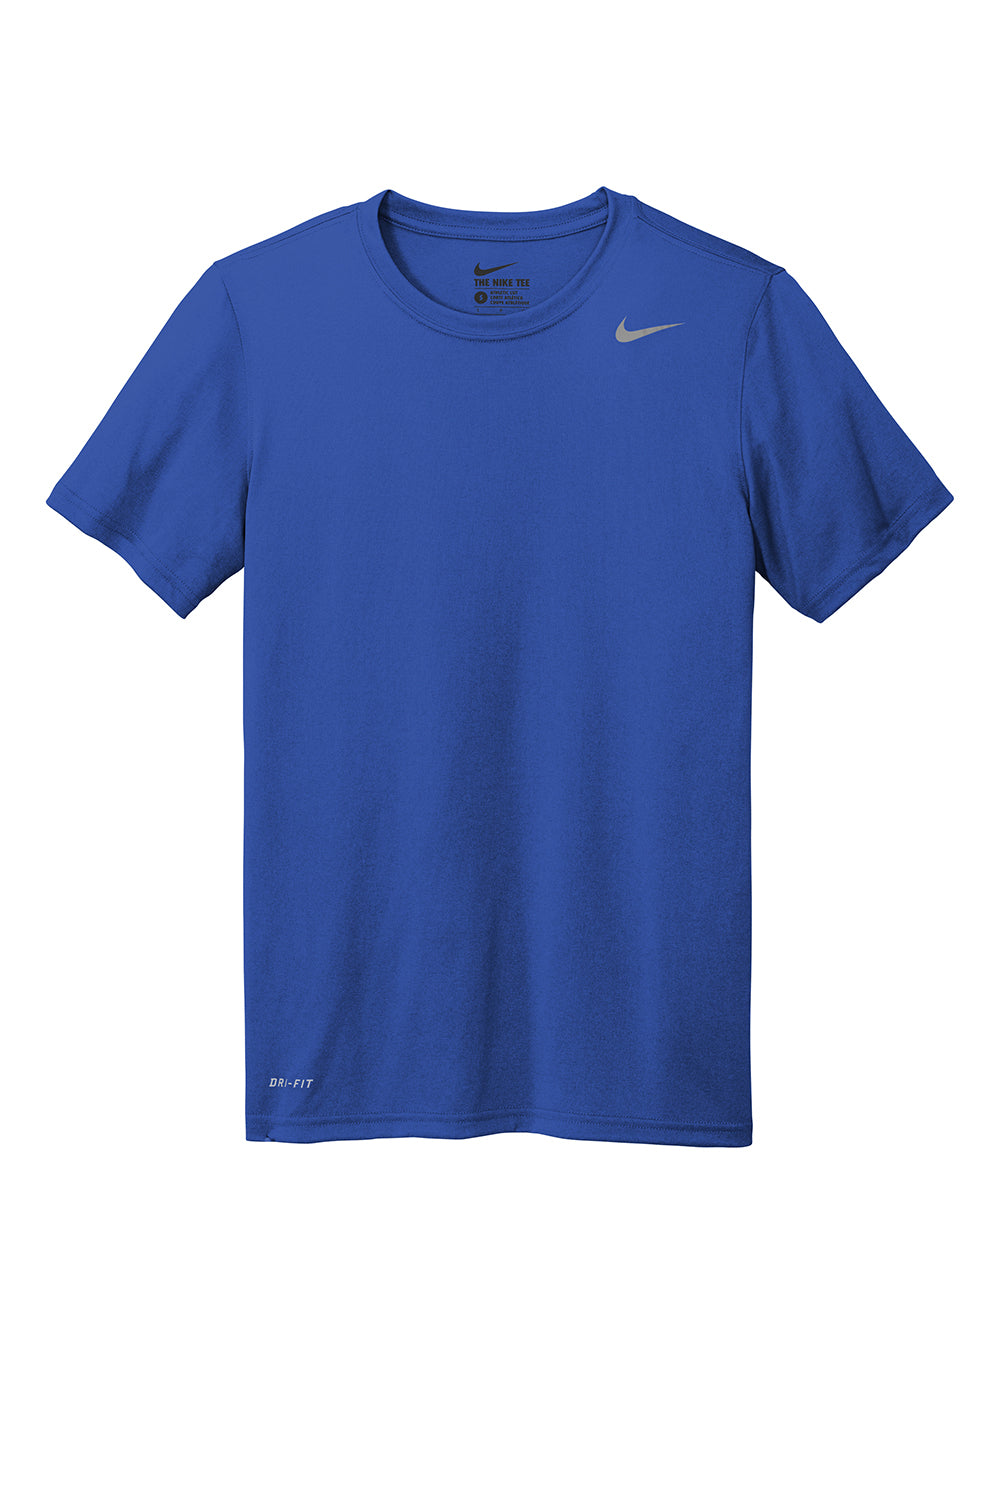 Nike DV7299 Mens Team rLegend Dri-Fit Moisture Wicking Short Sleeve Crewneck T-Shirt Game Royal Blue Flat Front